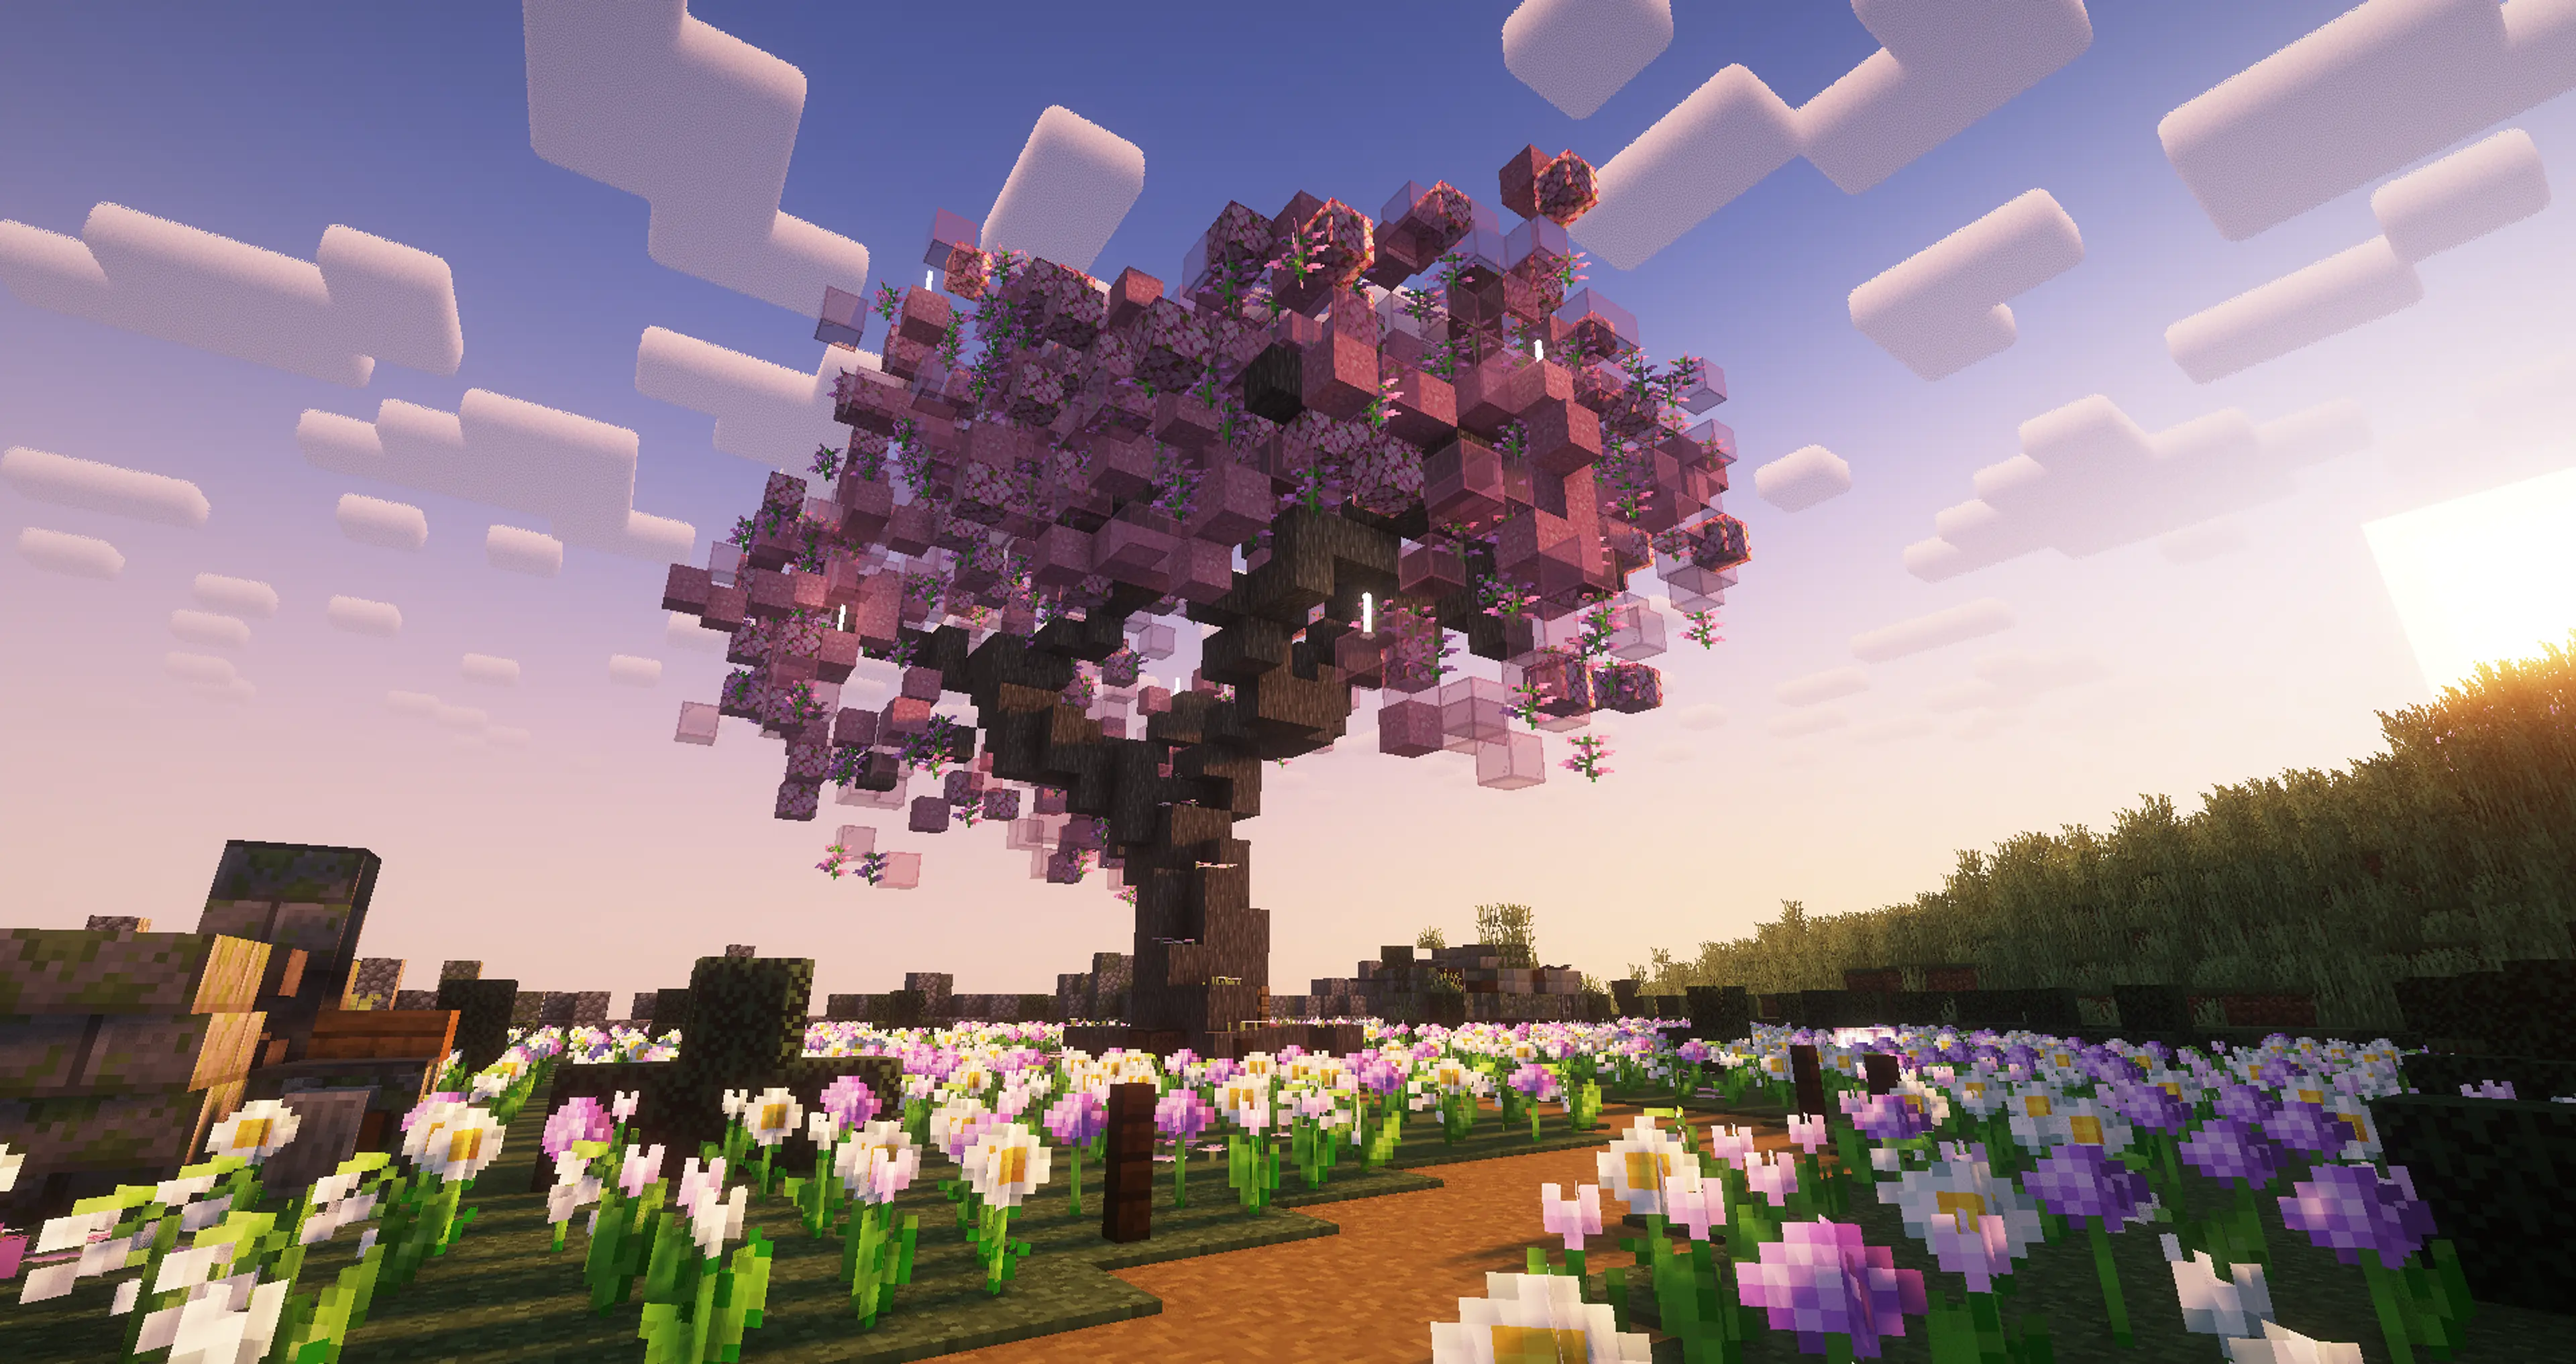 Under the cherry blossom tree